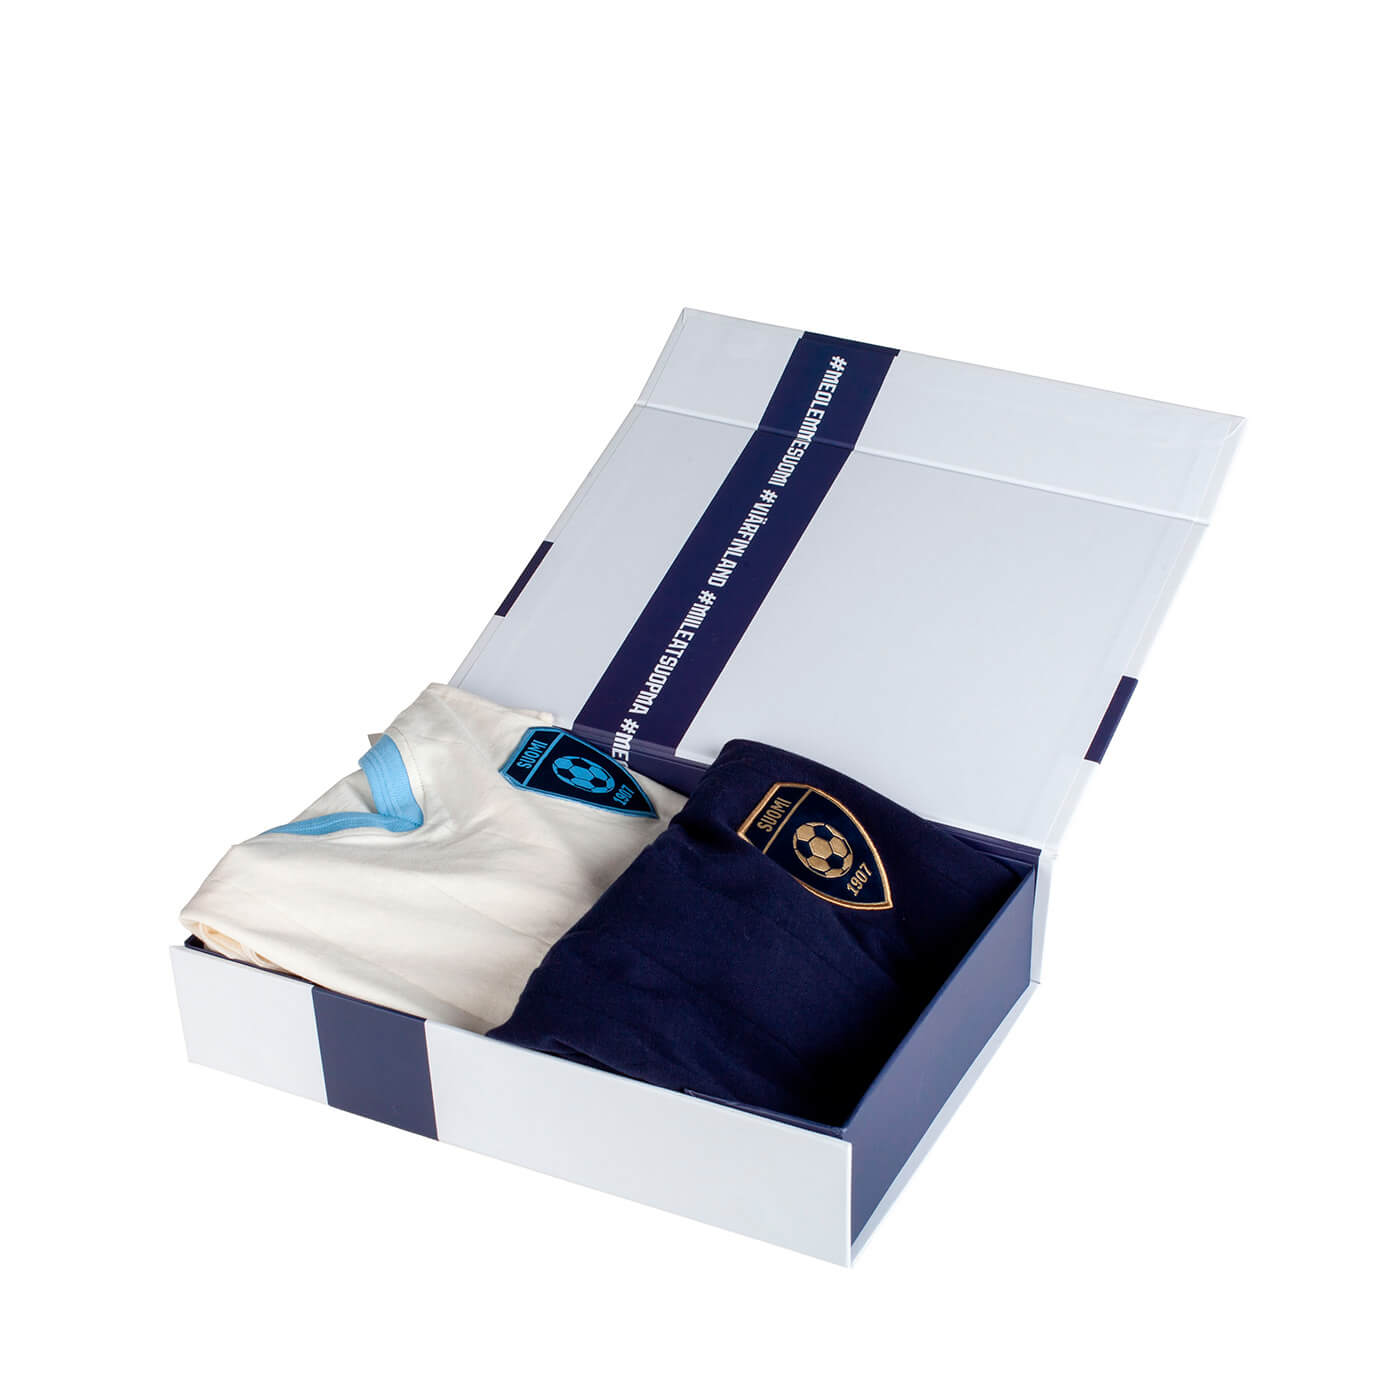 Finland gift box